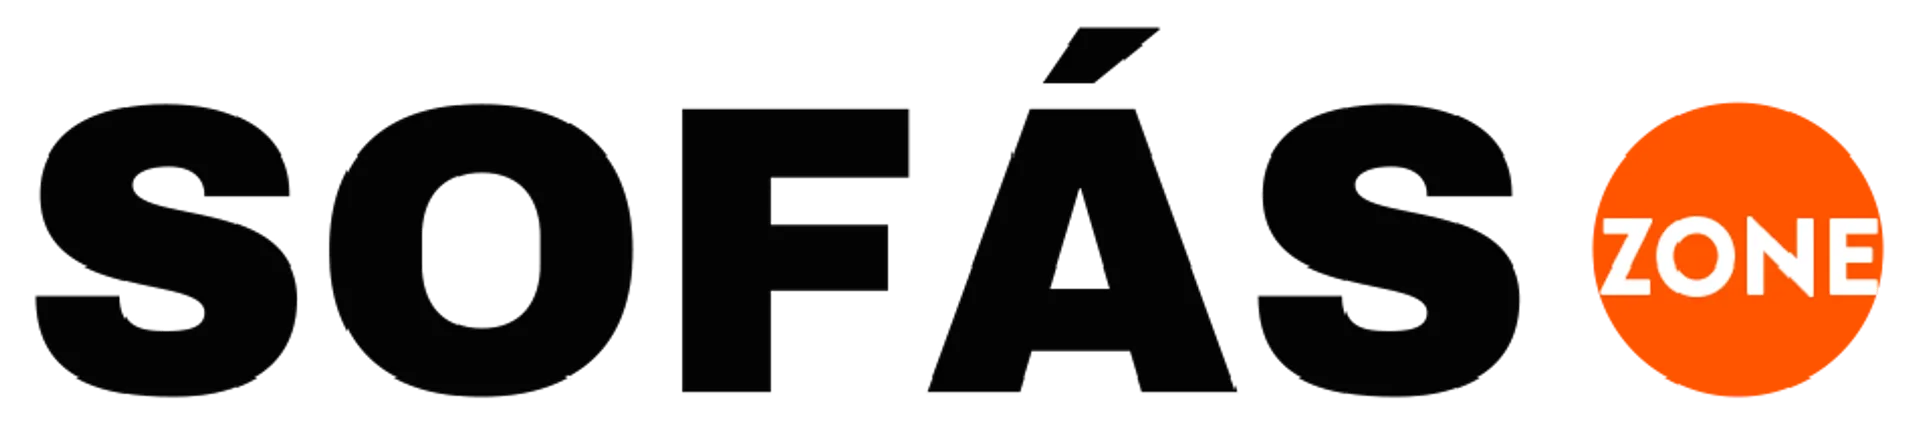 Sofászone logo